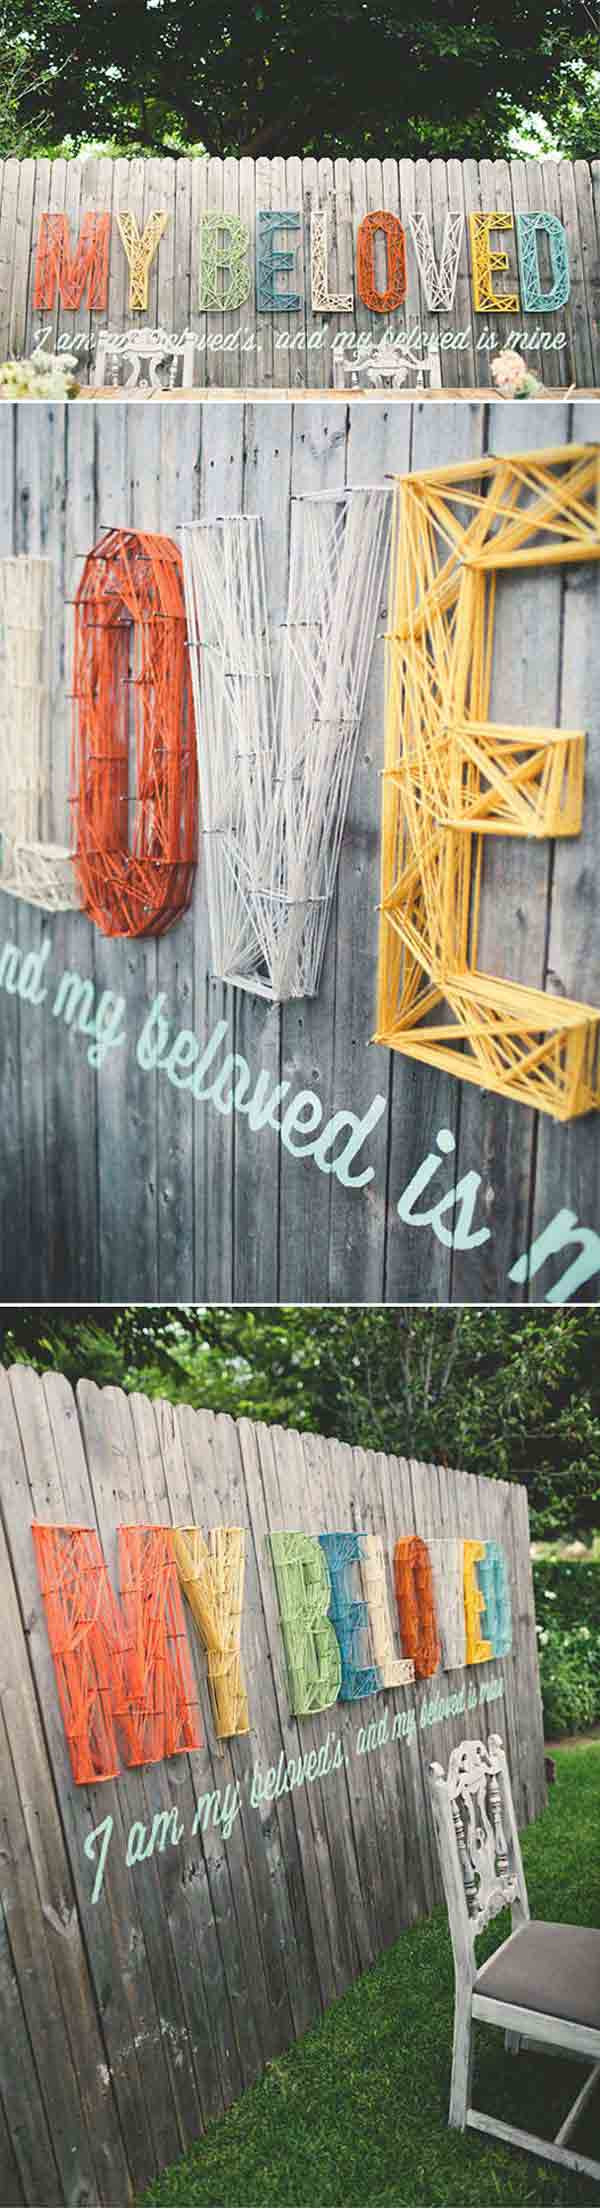 Backyard Fence Decoration Ideas
 Top 23 Surprising DIY Ideas To Decorate Your Garden Fence